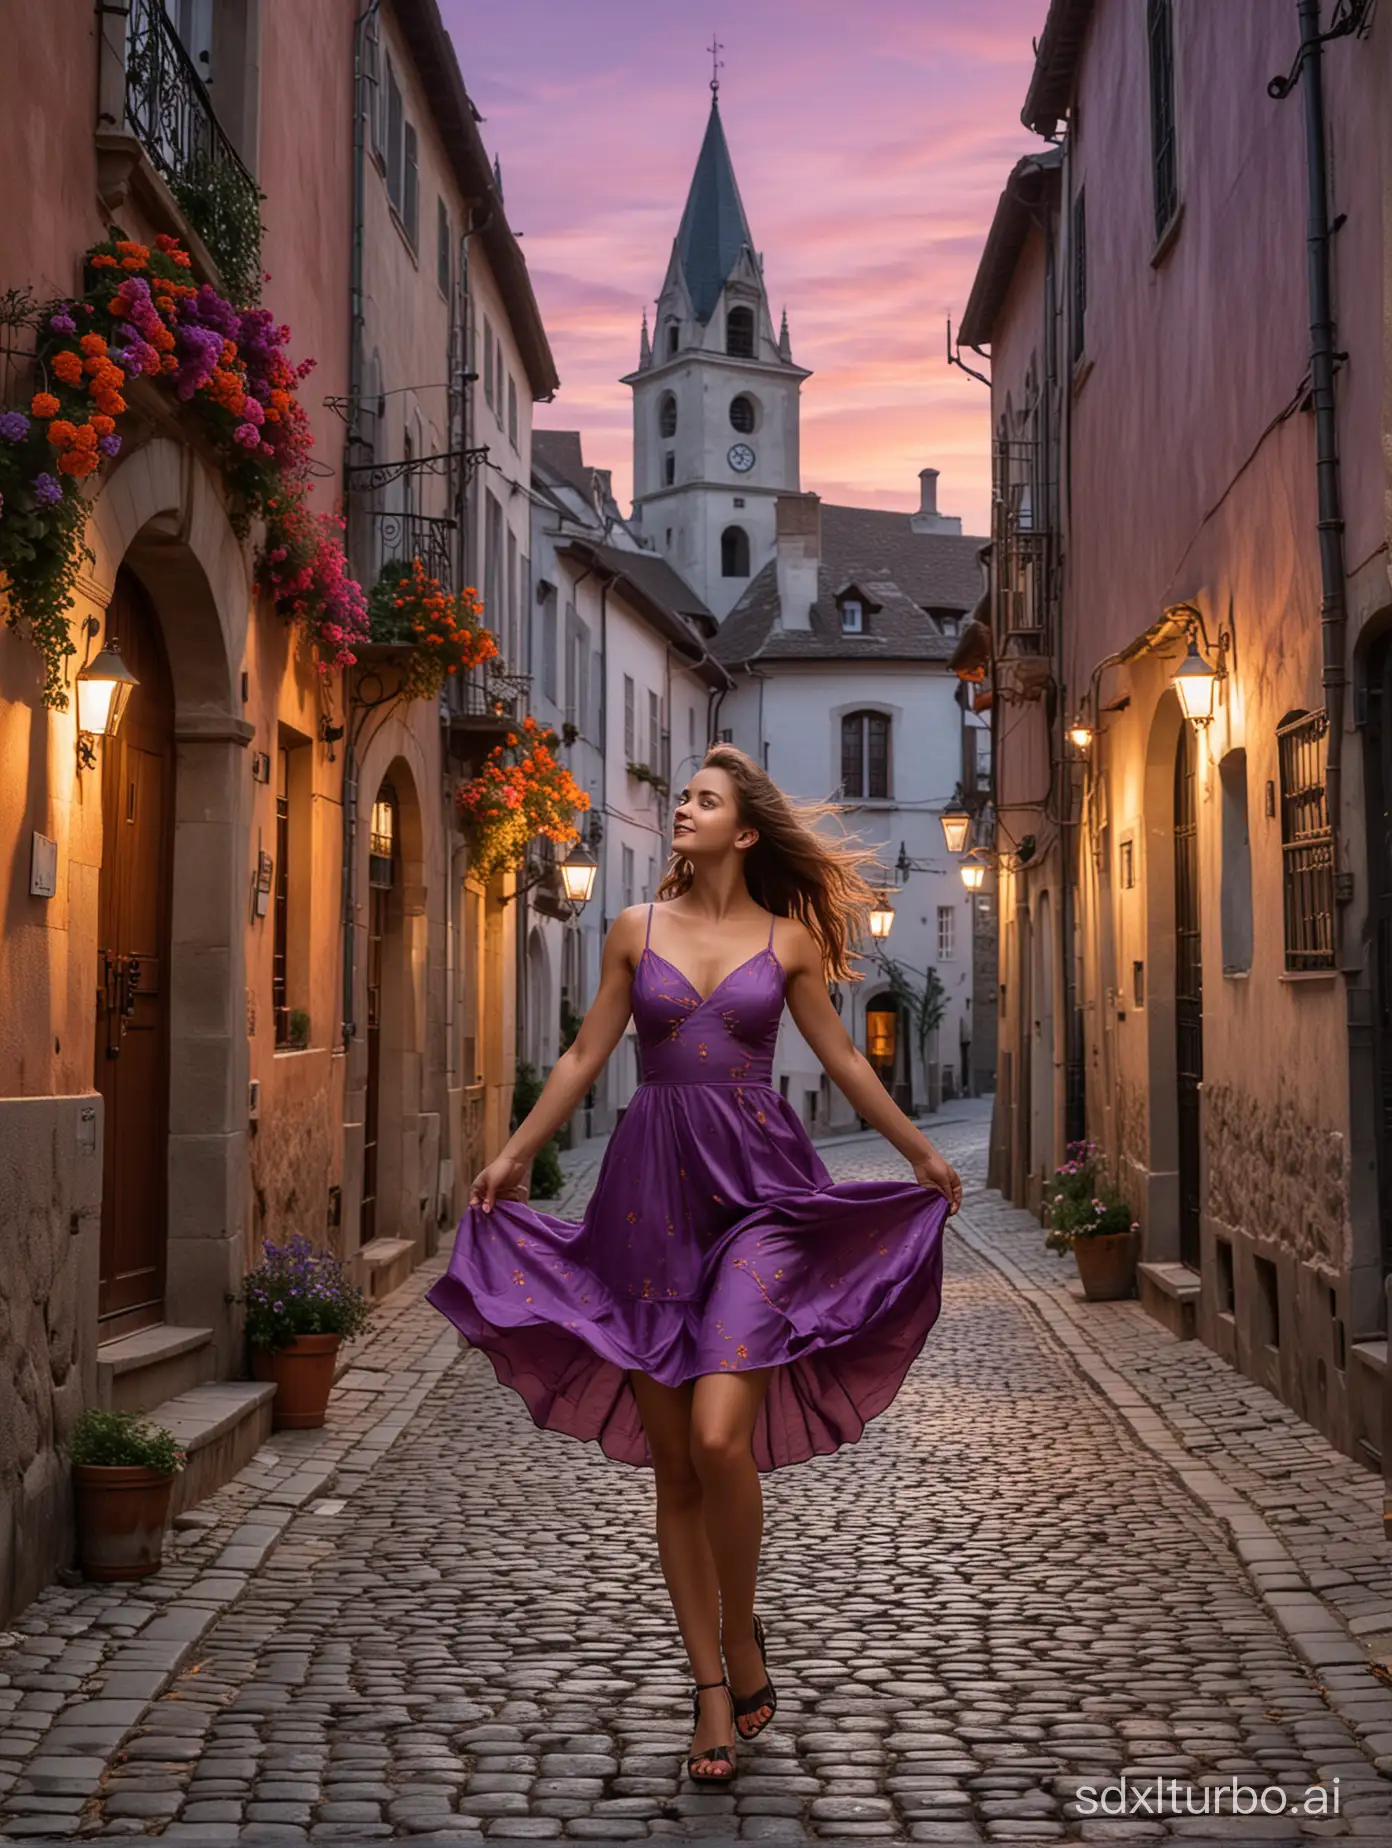 Vibrant-Twilight-Dance-Joyful-Young-Woman-in-Historic-European-Old-Town